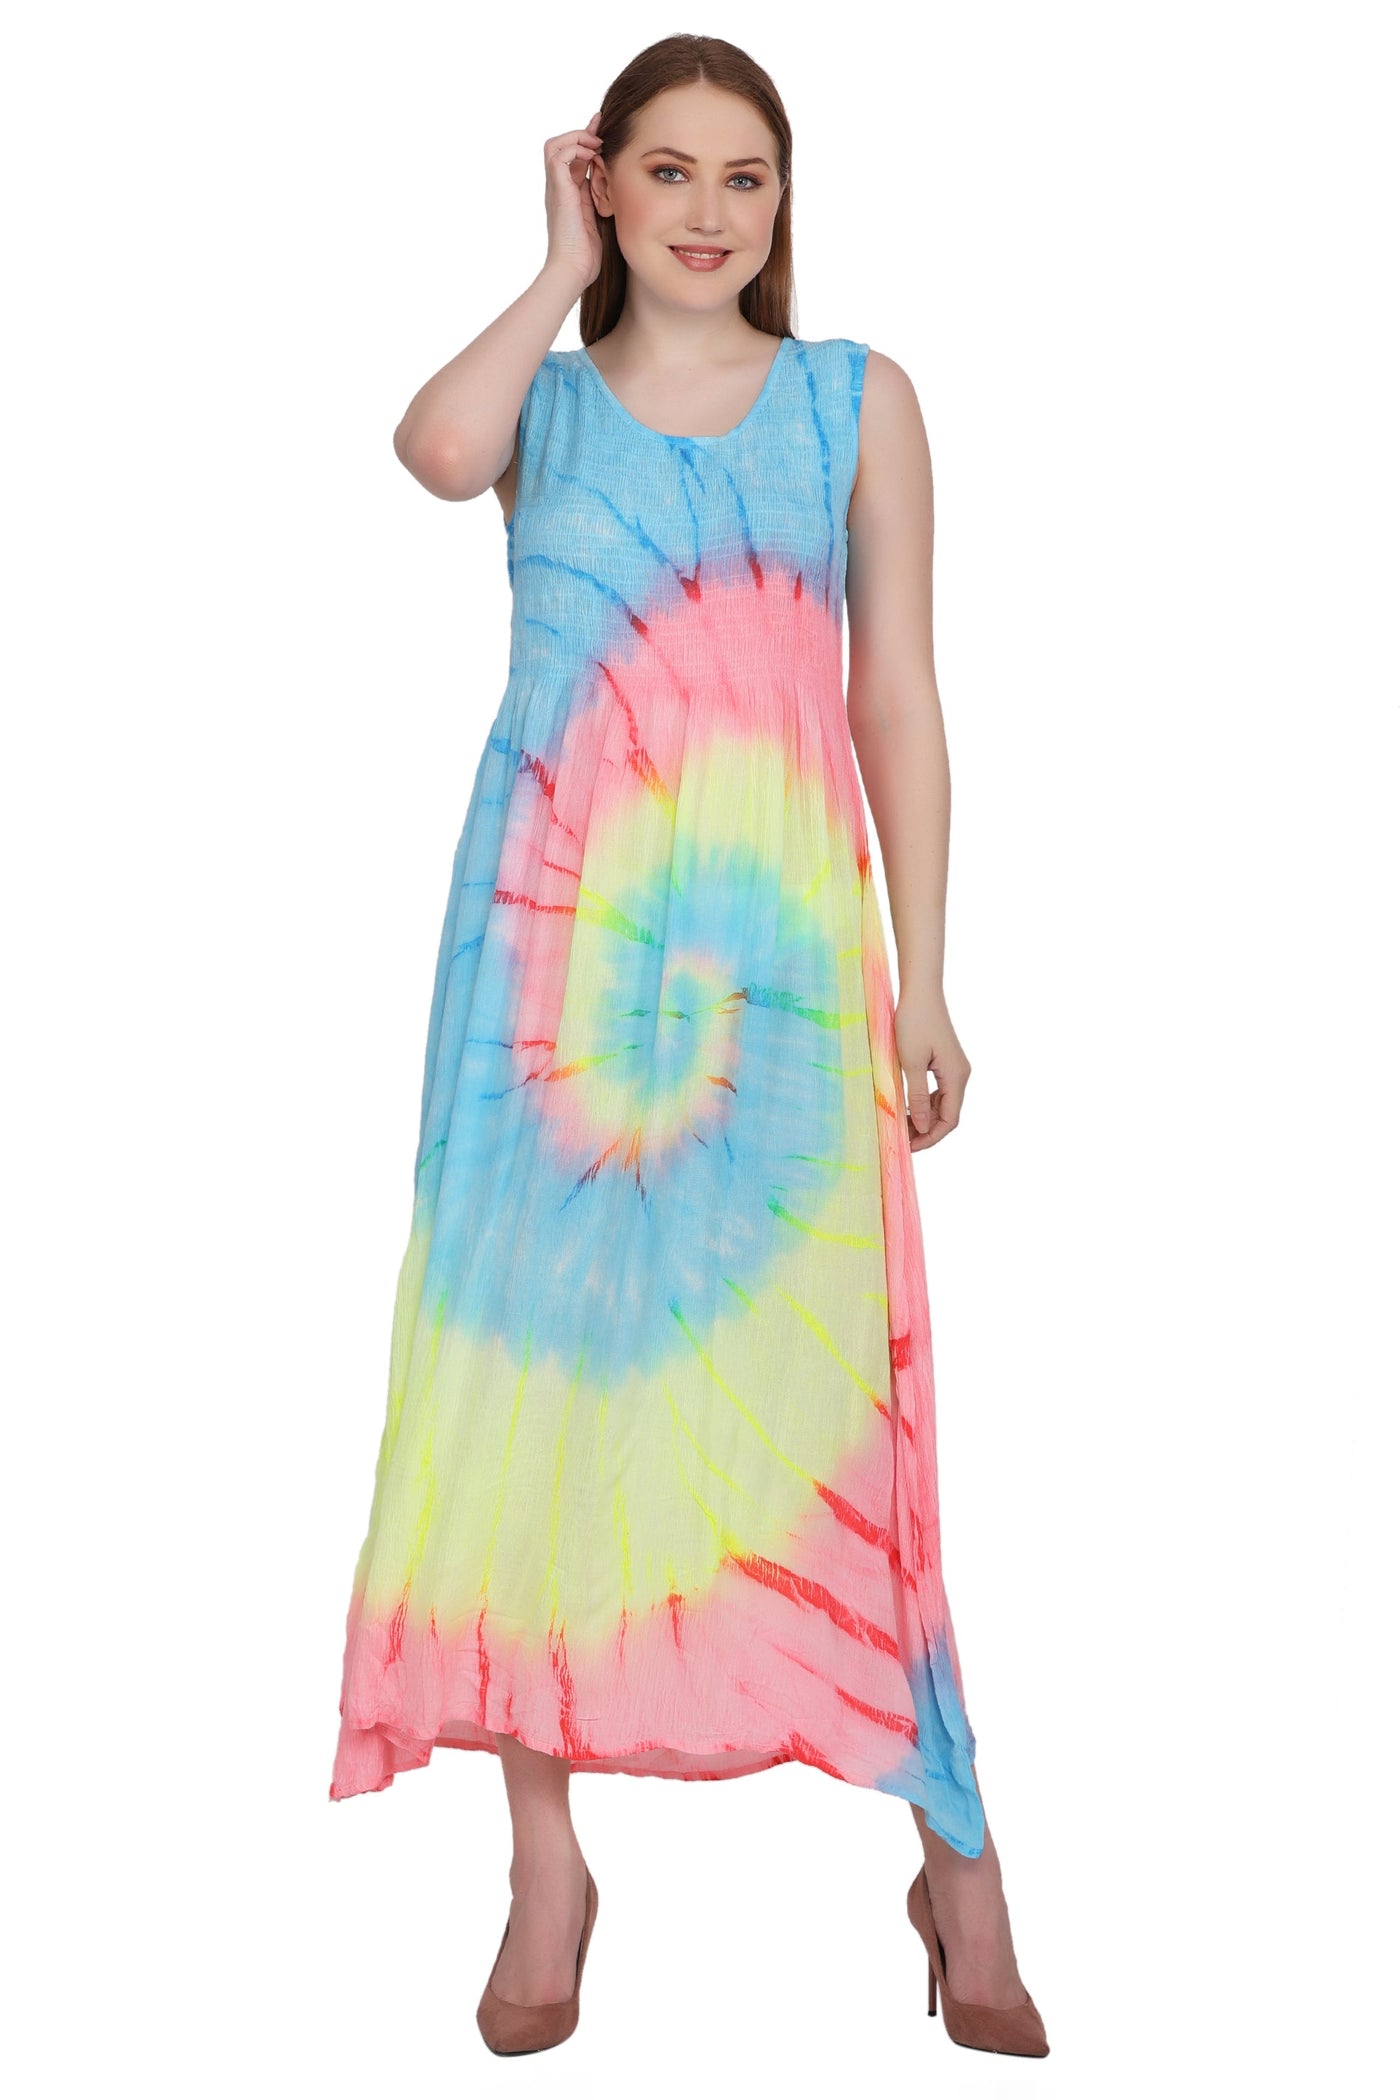 Neon Tie Dye Sleeveless Dress 522138